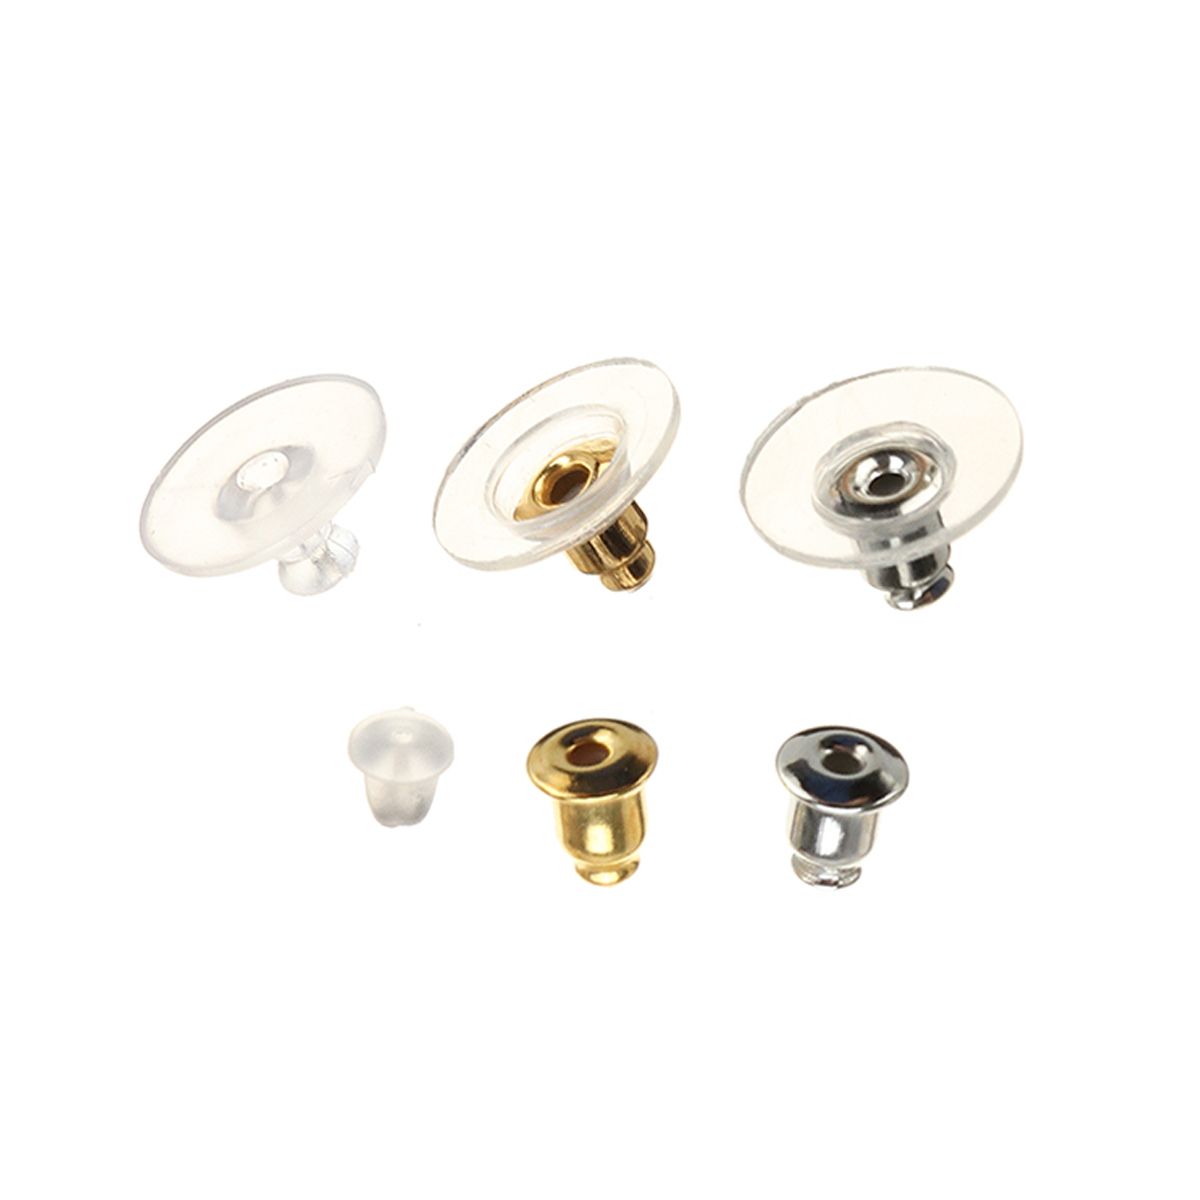 Gold-Silver-Mixed-Color-Repair-Metal-Tools-DIY-Craft-Supplies-Set-Jewelry-Making-1701242